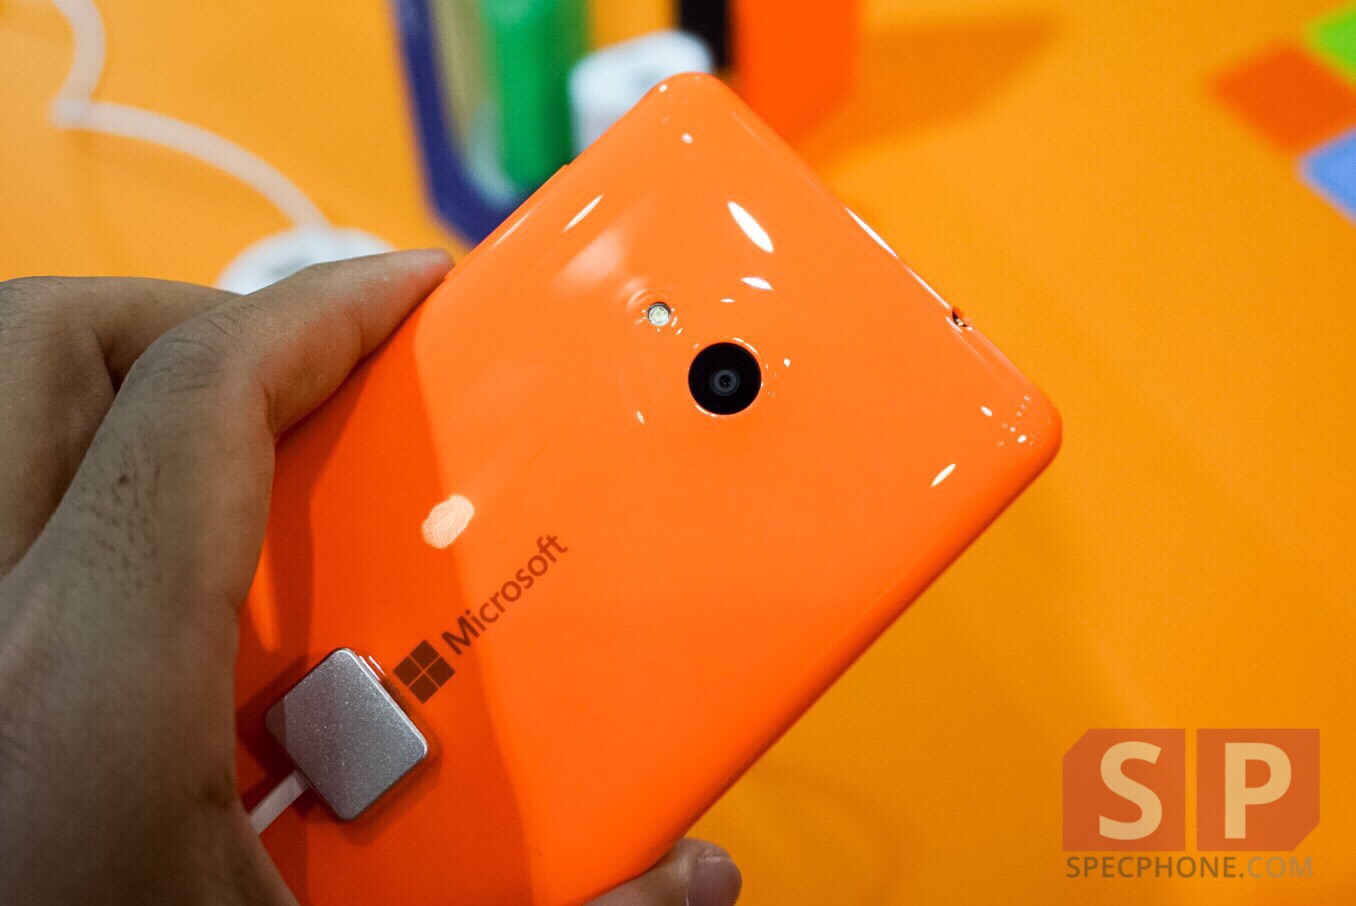 Hands-on + พรีวิว Microsoft Lumia 535 มือถือรุ่นแรกของ Microsoft กับสเปคโดนใจ ในราคาไม่ถึง 5,000 บาท